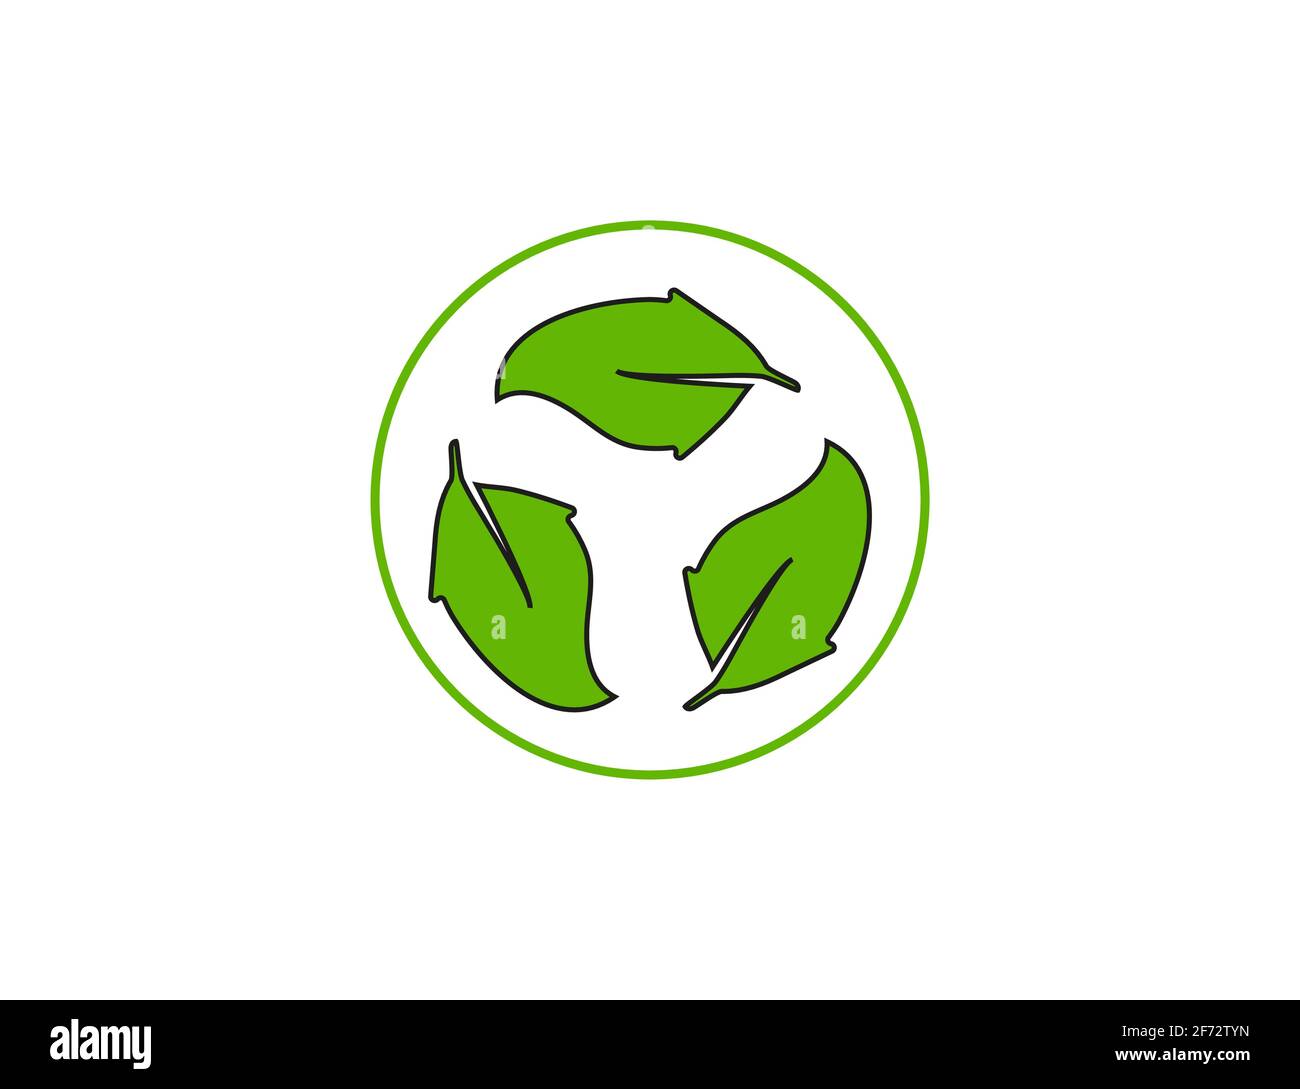 Icona Eco, Leaves, Recycle. Illustrazione vettoriale, disegno. Illustrazione Vettoriale